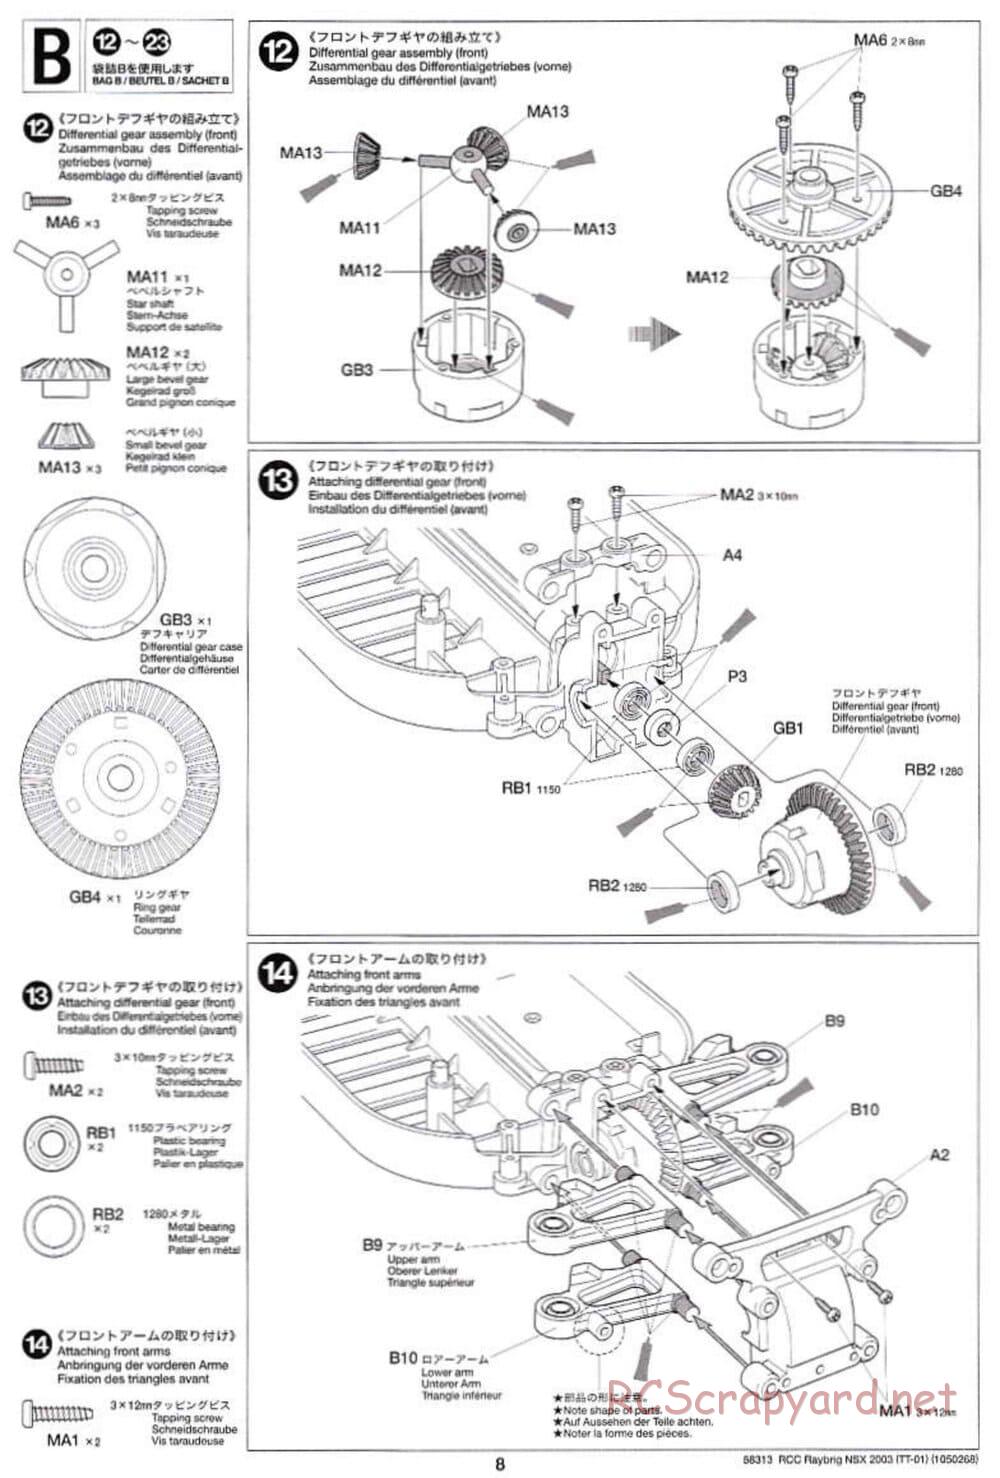 Tamiya - Raybrig NSX 2003 - TT-01 Chassis - Manual - Page 8